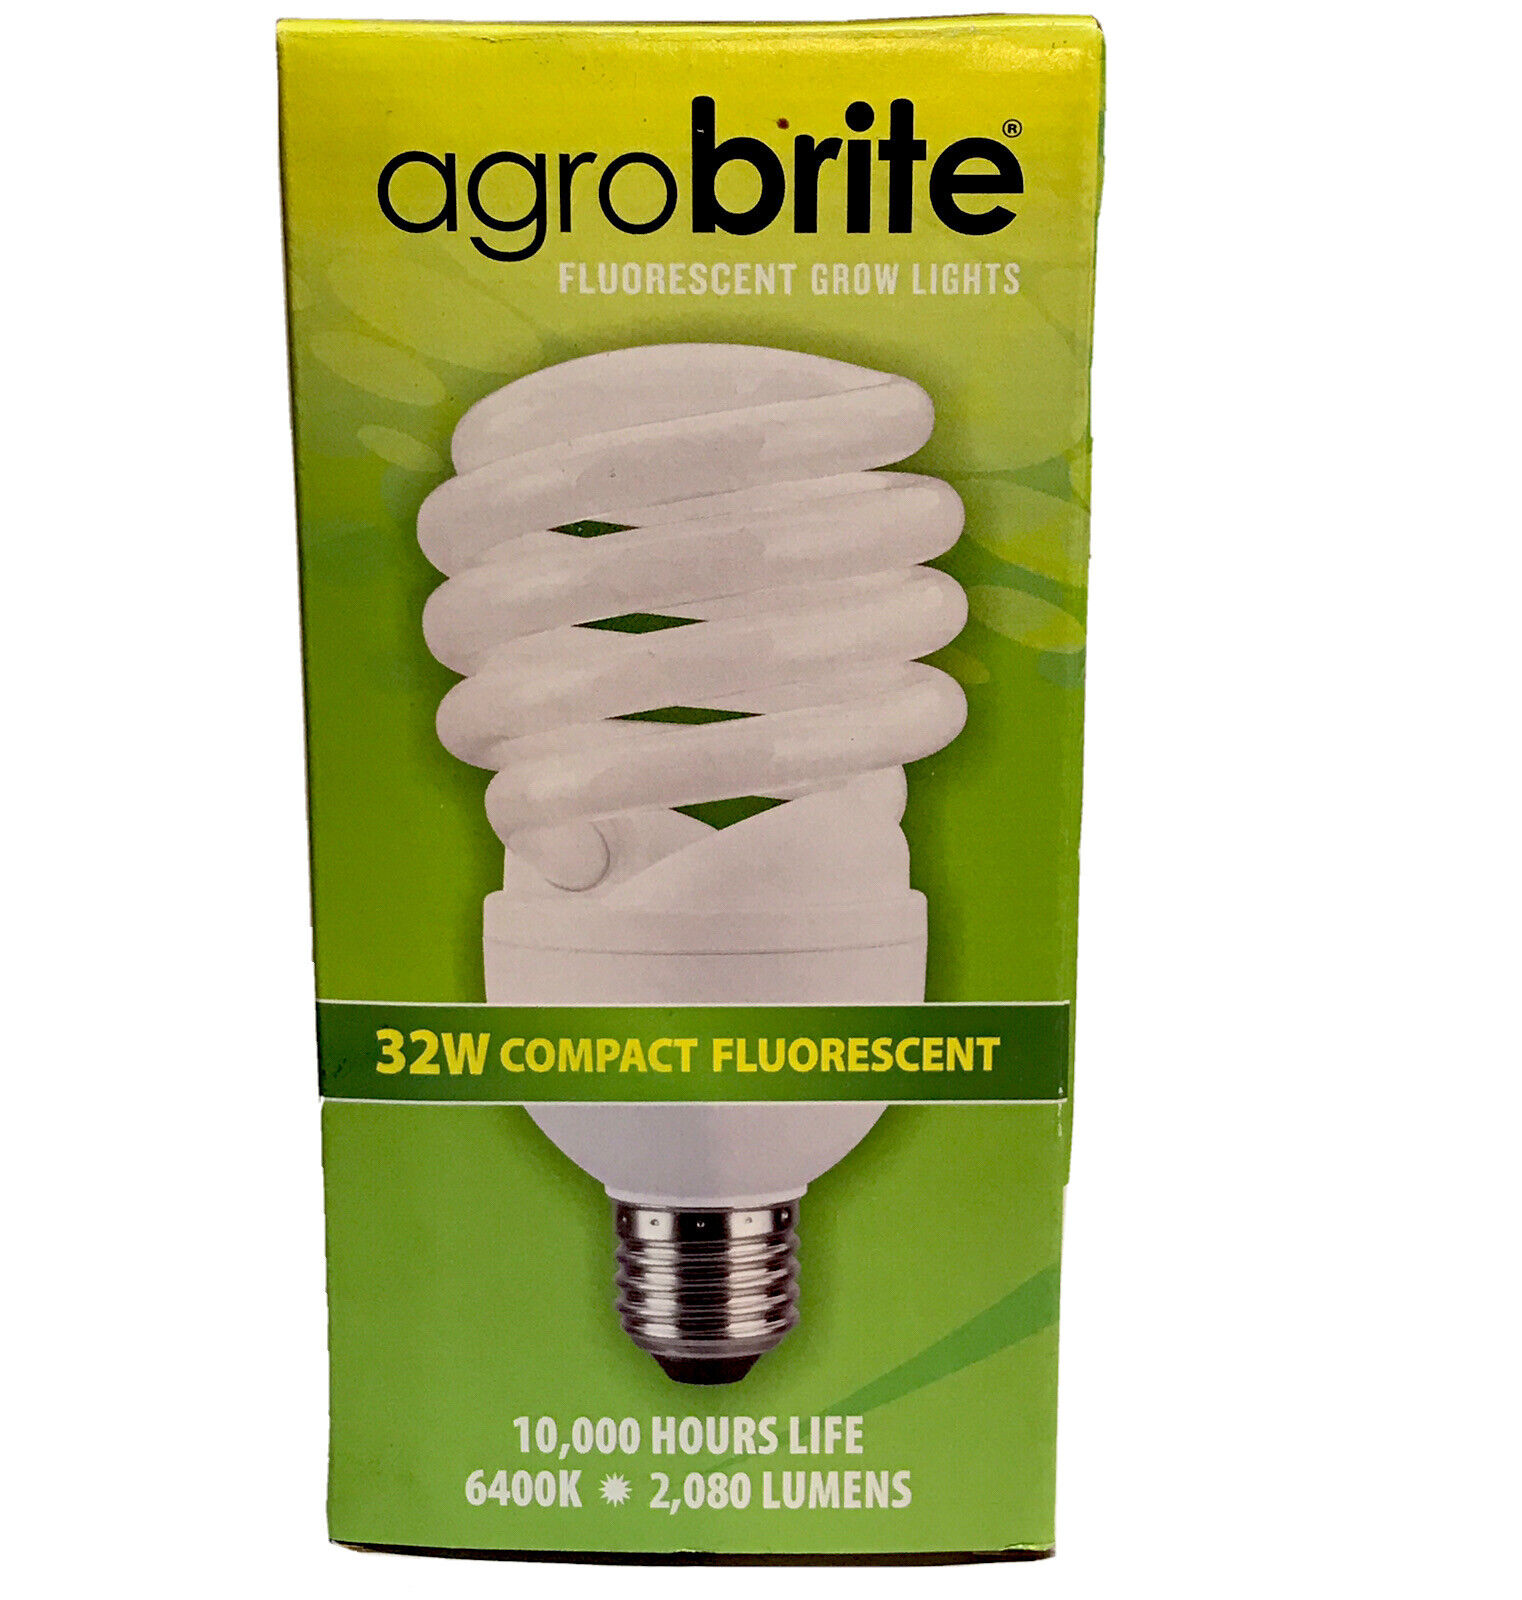 Agrobrite Compact Fluorescent Grow Lamp, 32W/6400K, 2080 Lumens, Full Spectrum